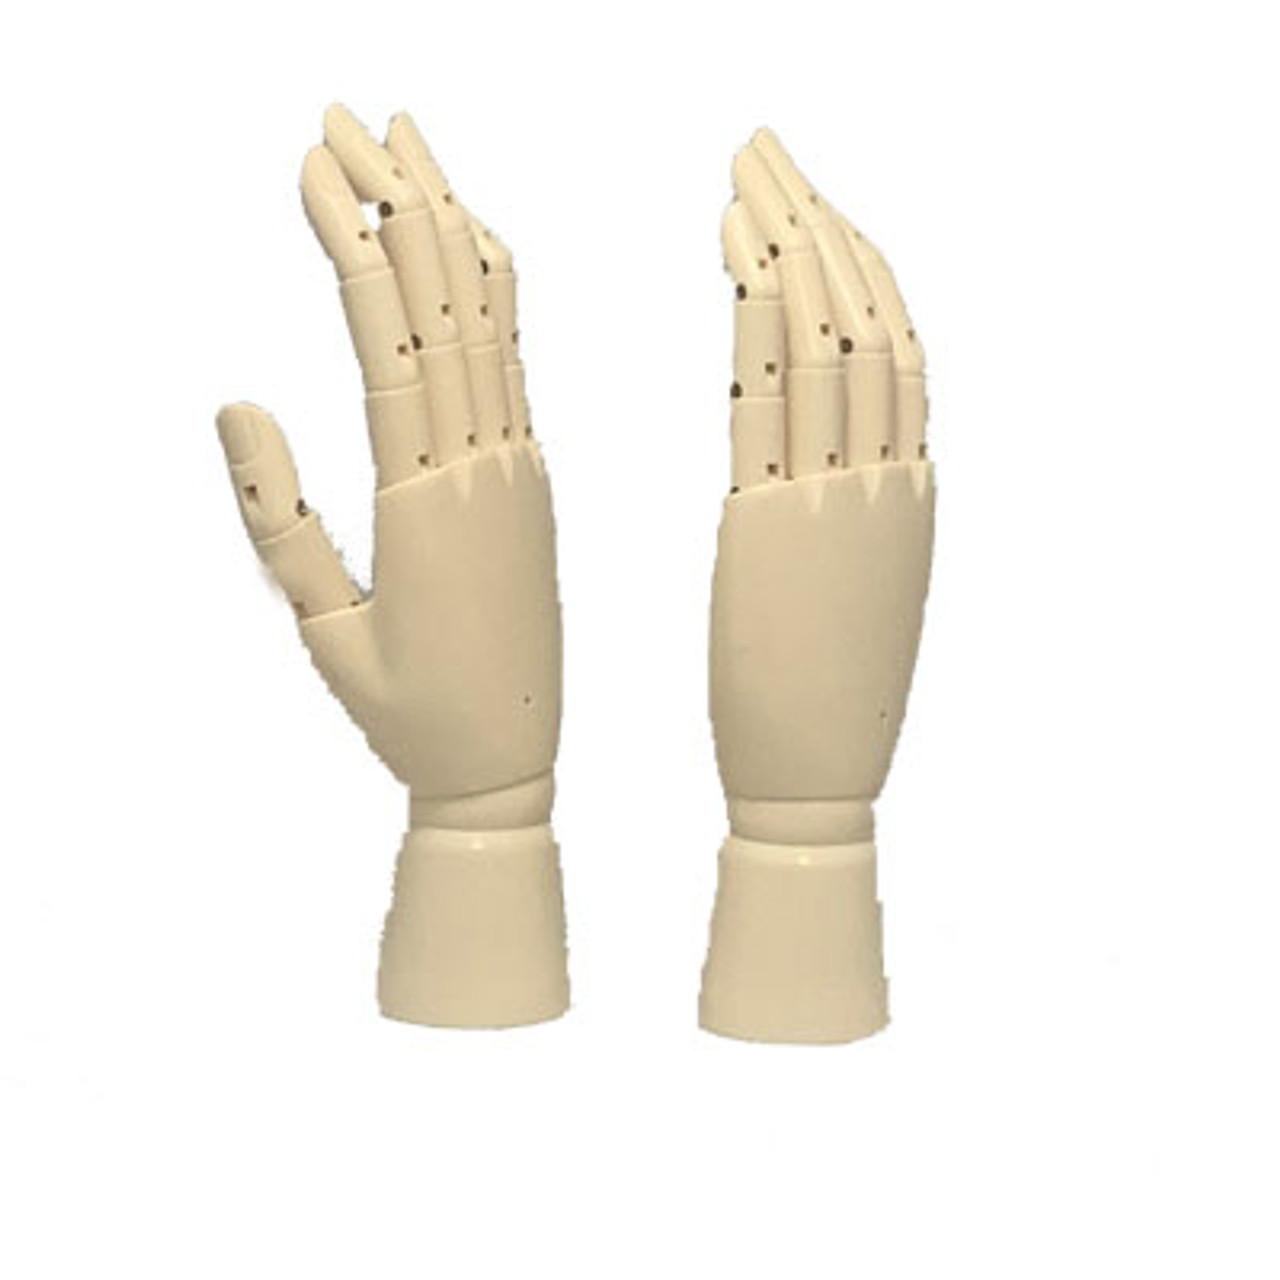 Articulating Female Self Standing Skin Tone Glove Hands - per pair